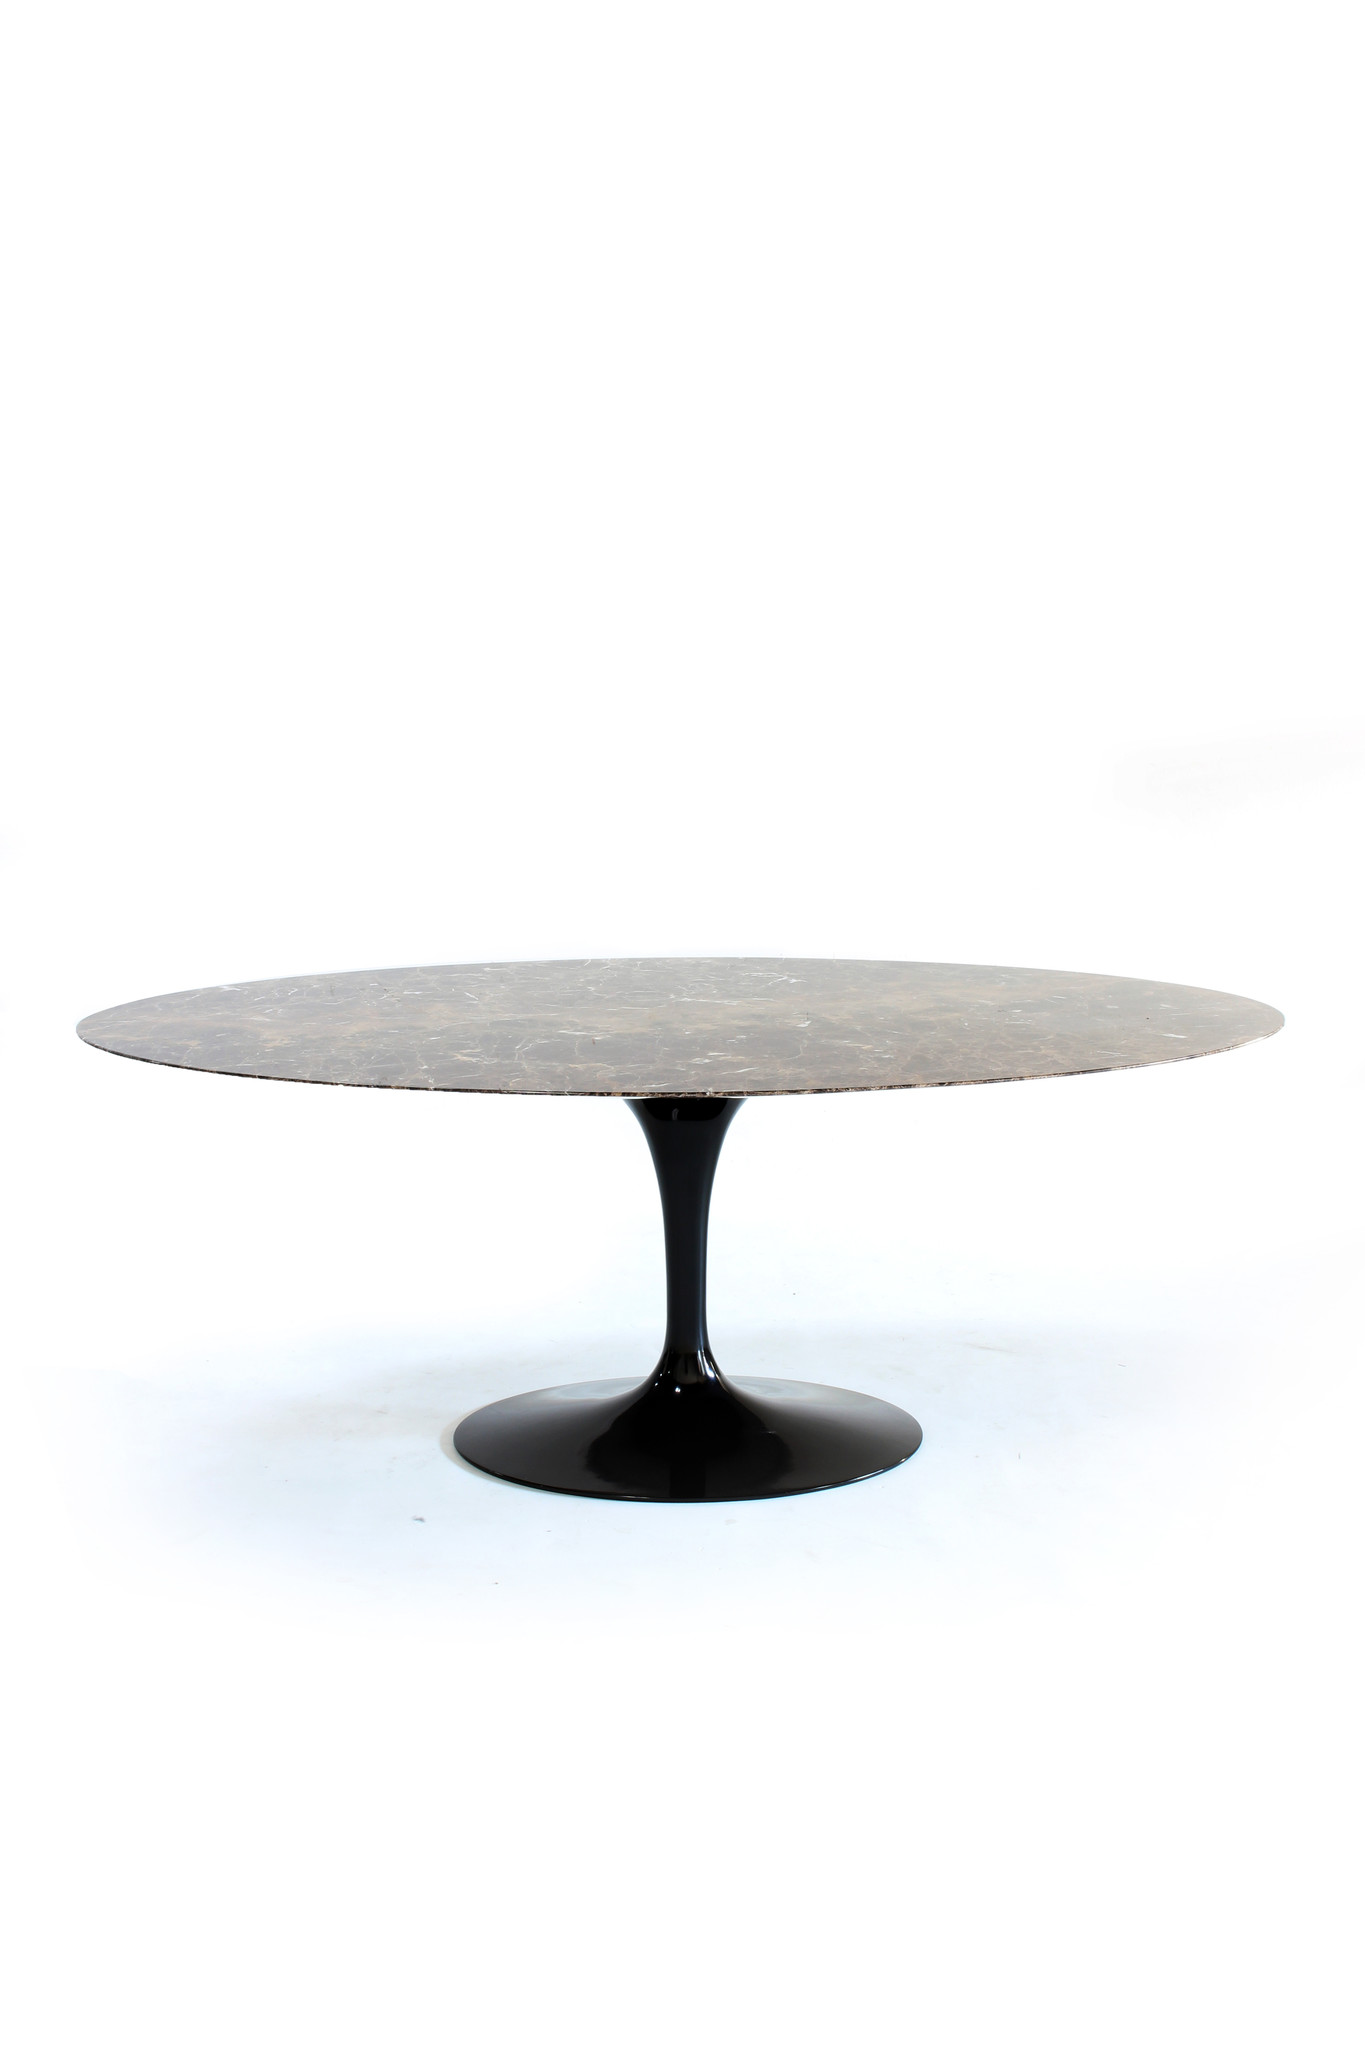 Eero Saarinen Knoll oval table with matching tulip chairs.